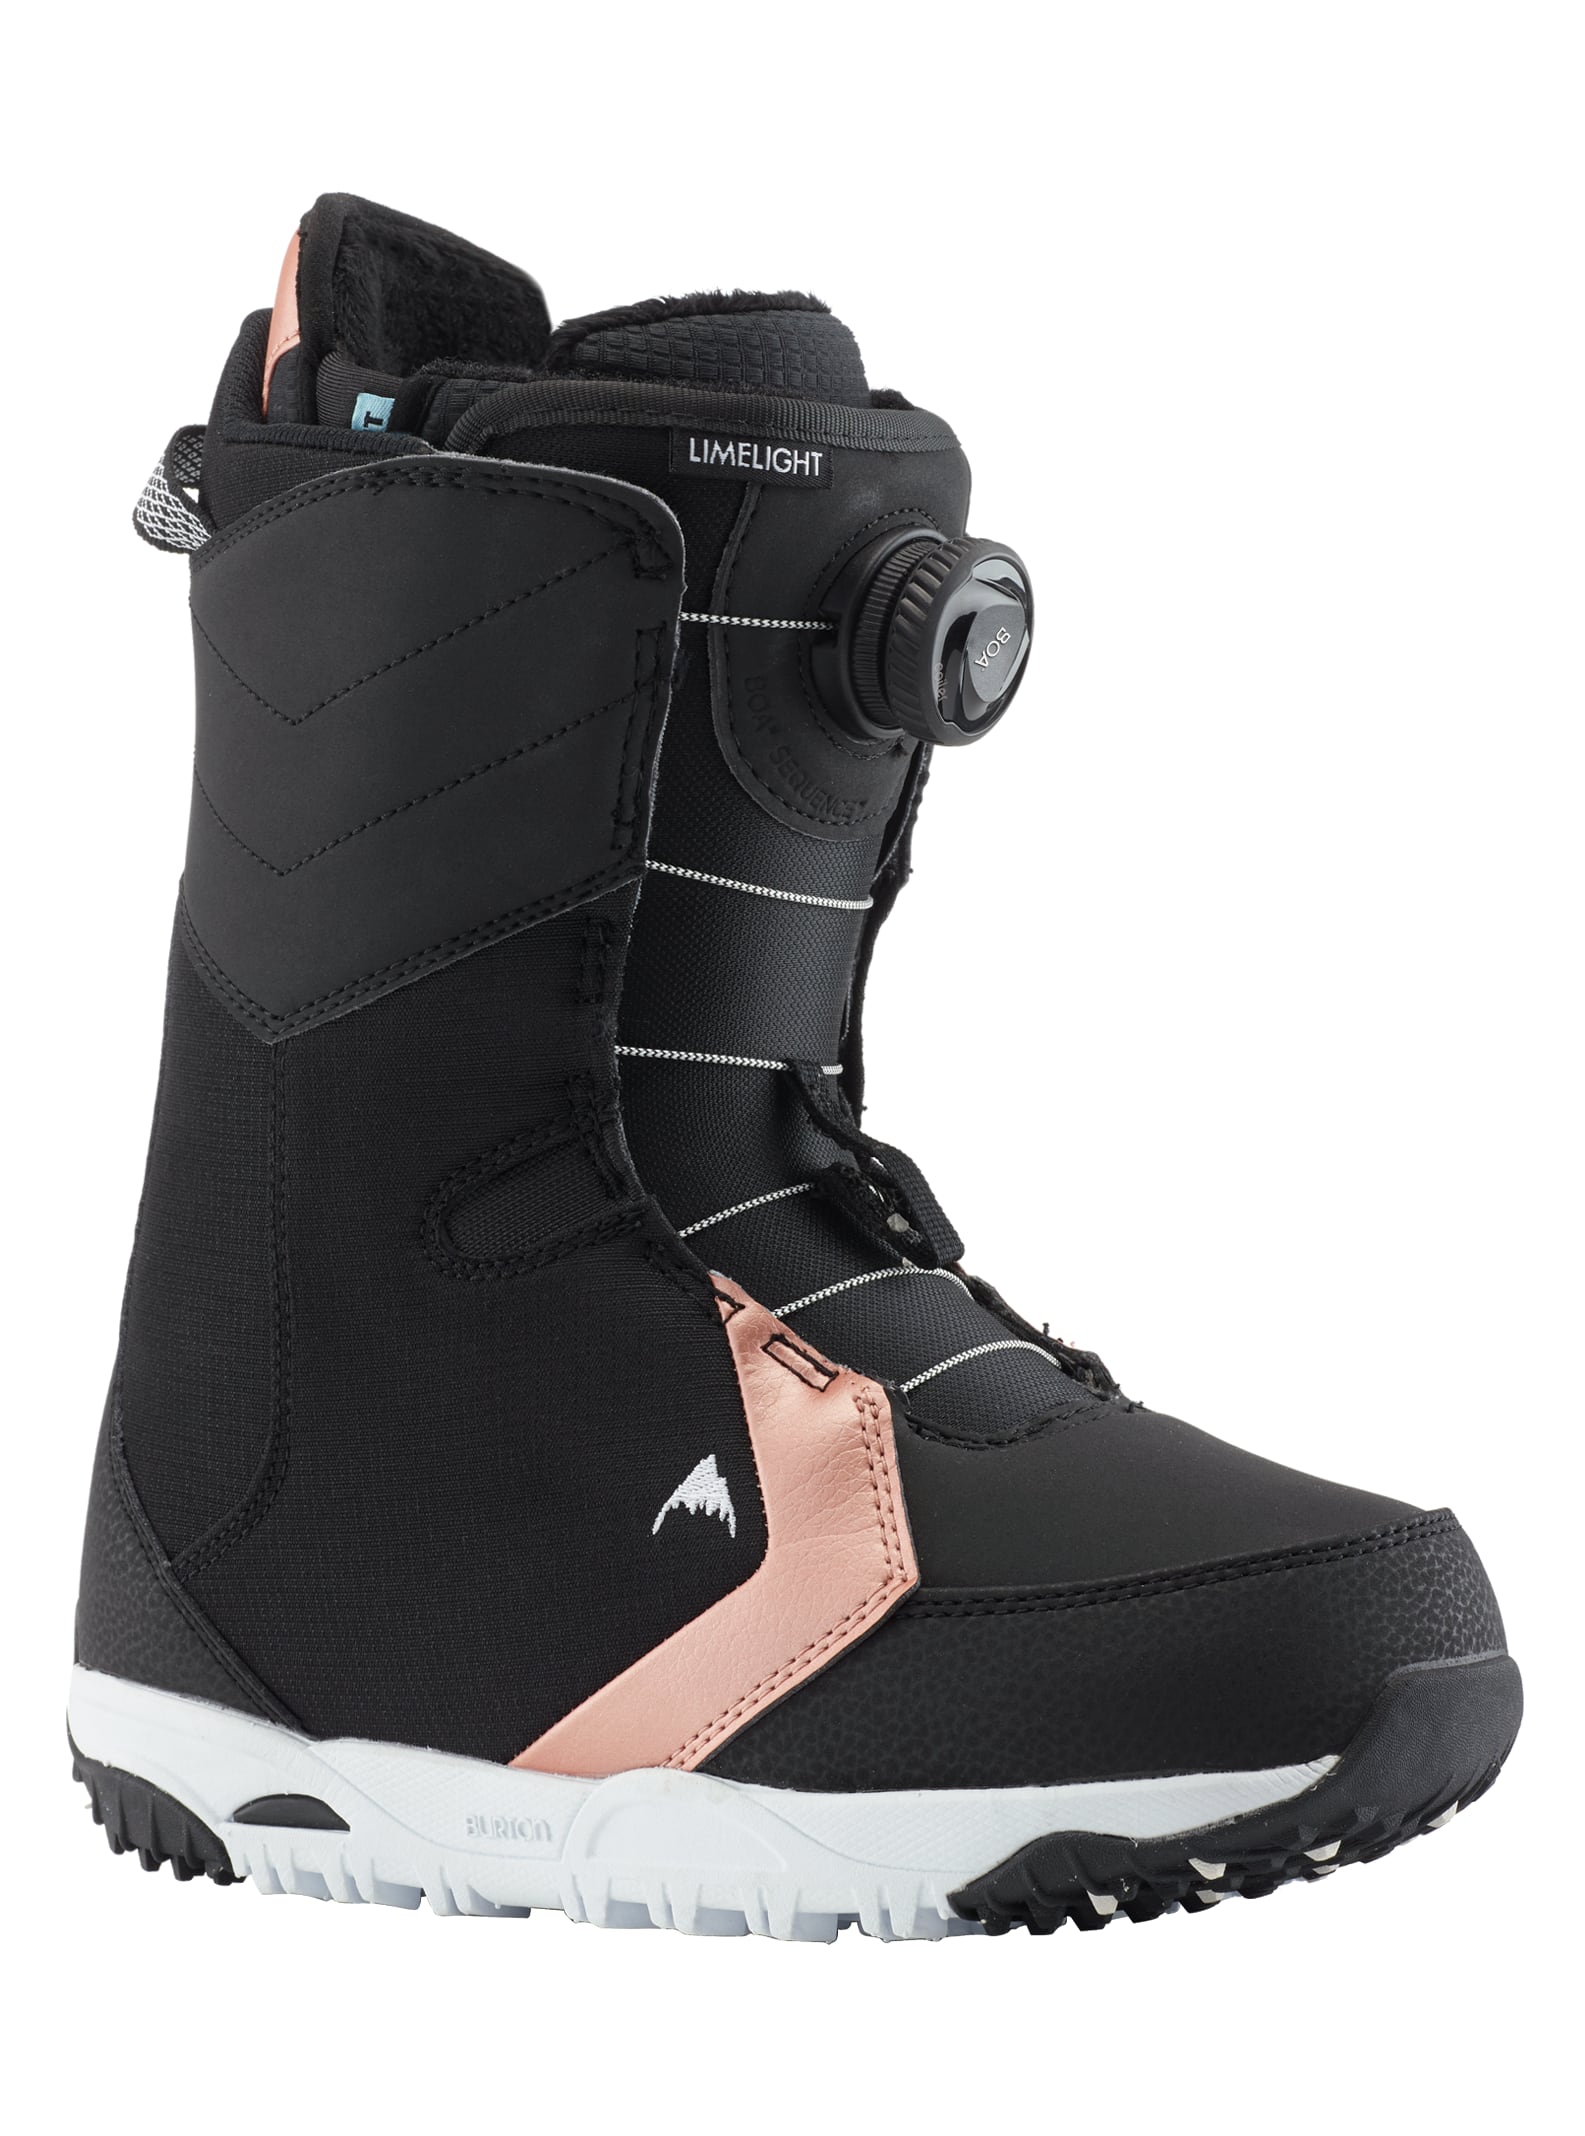 Women's Burton Limelight Boa® Snowboard Boot